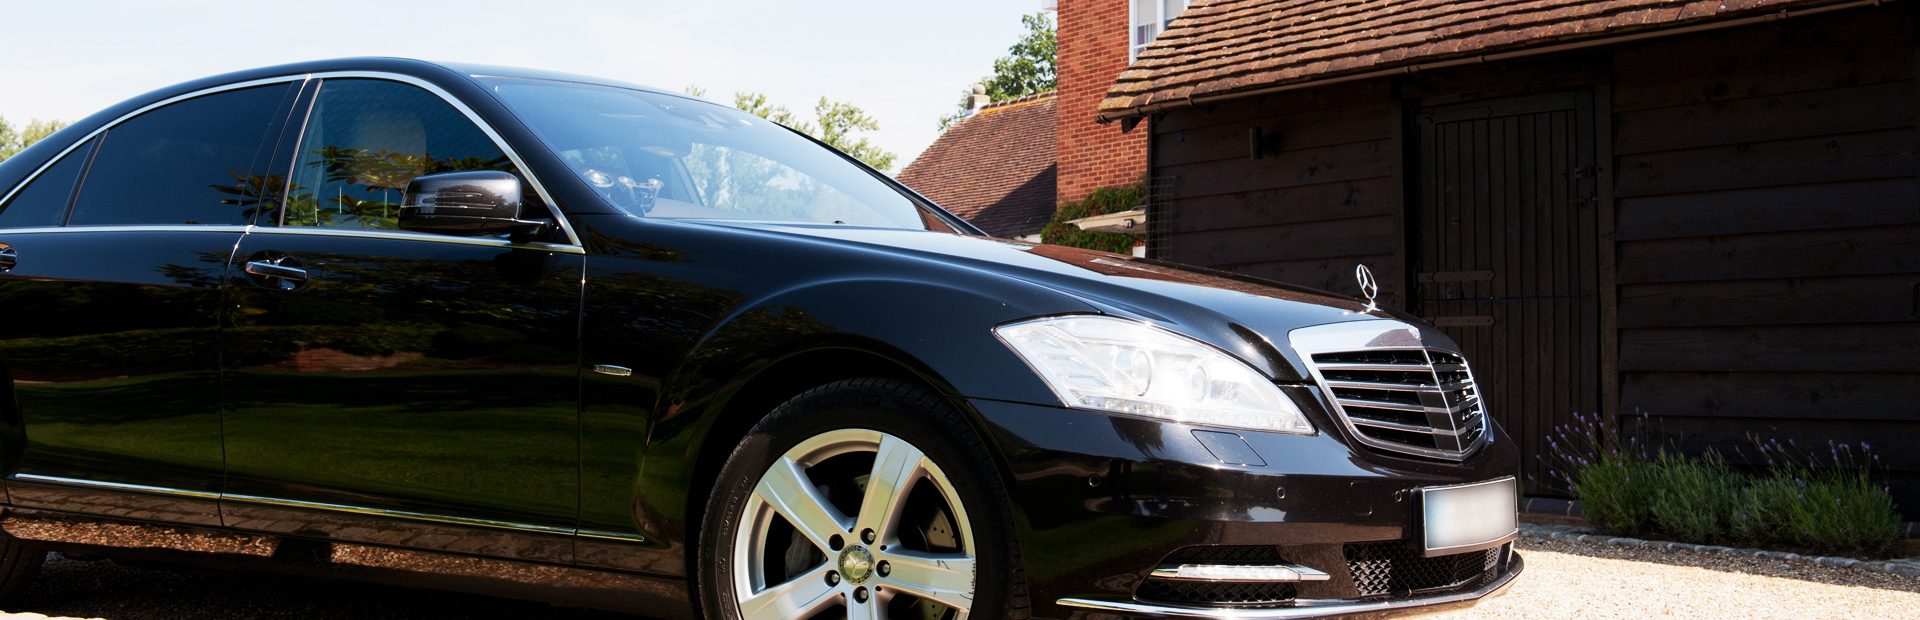 Luxury chauffeur car service in Surrey